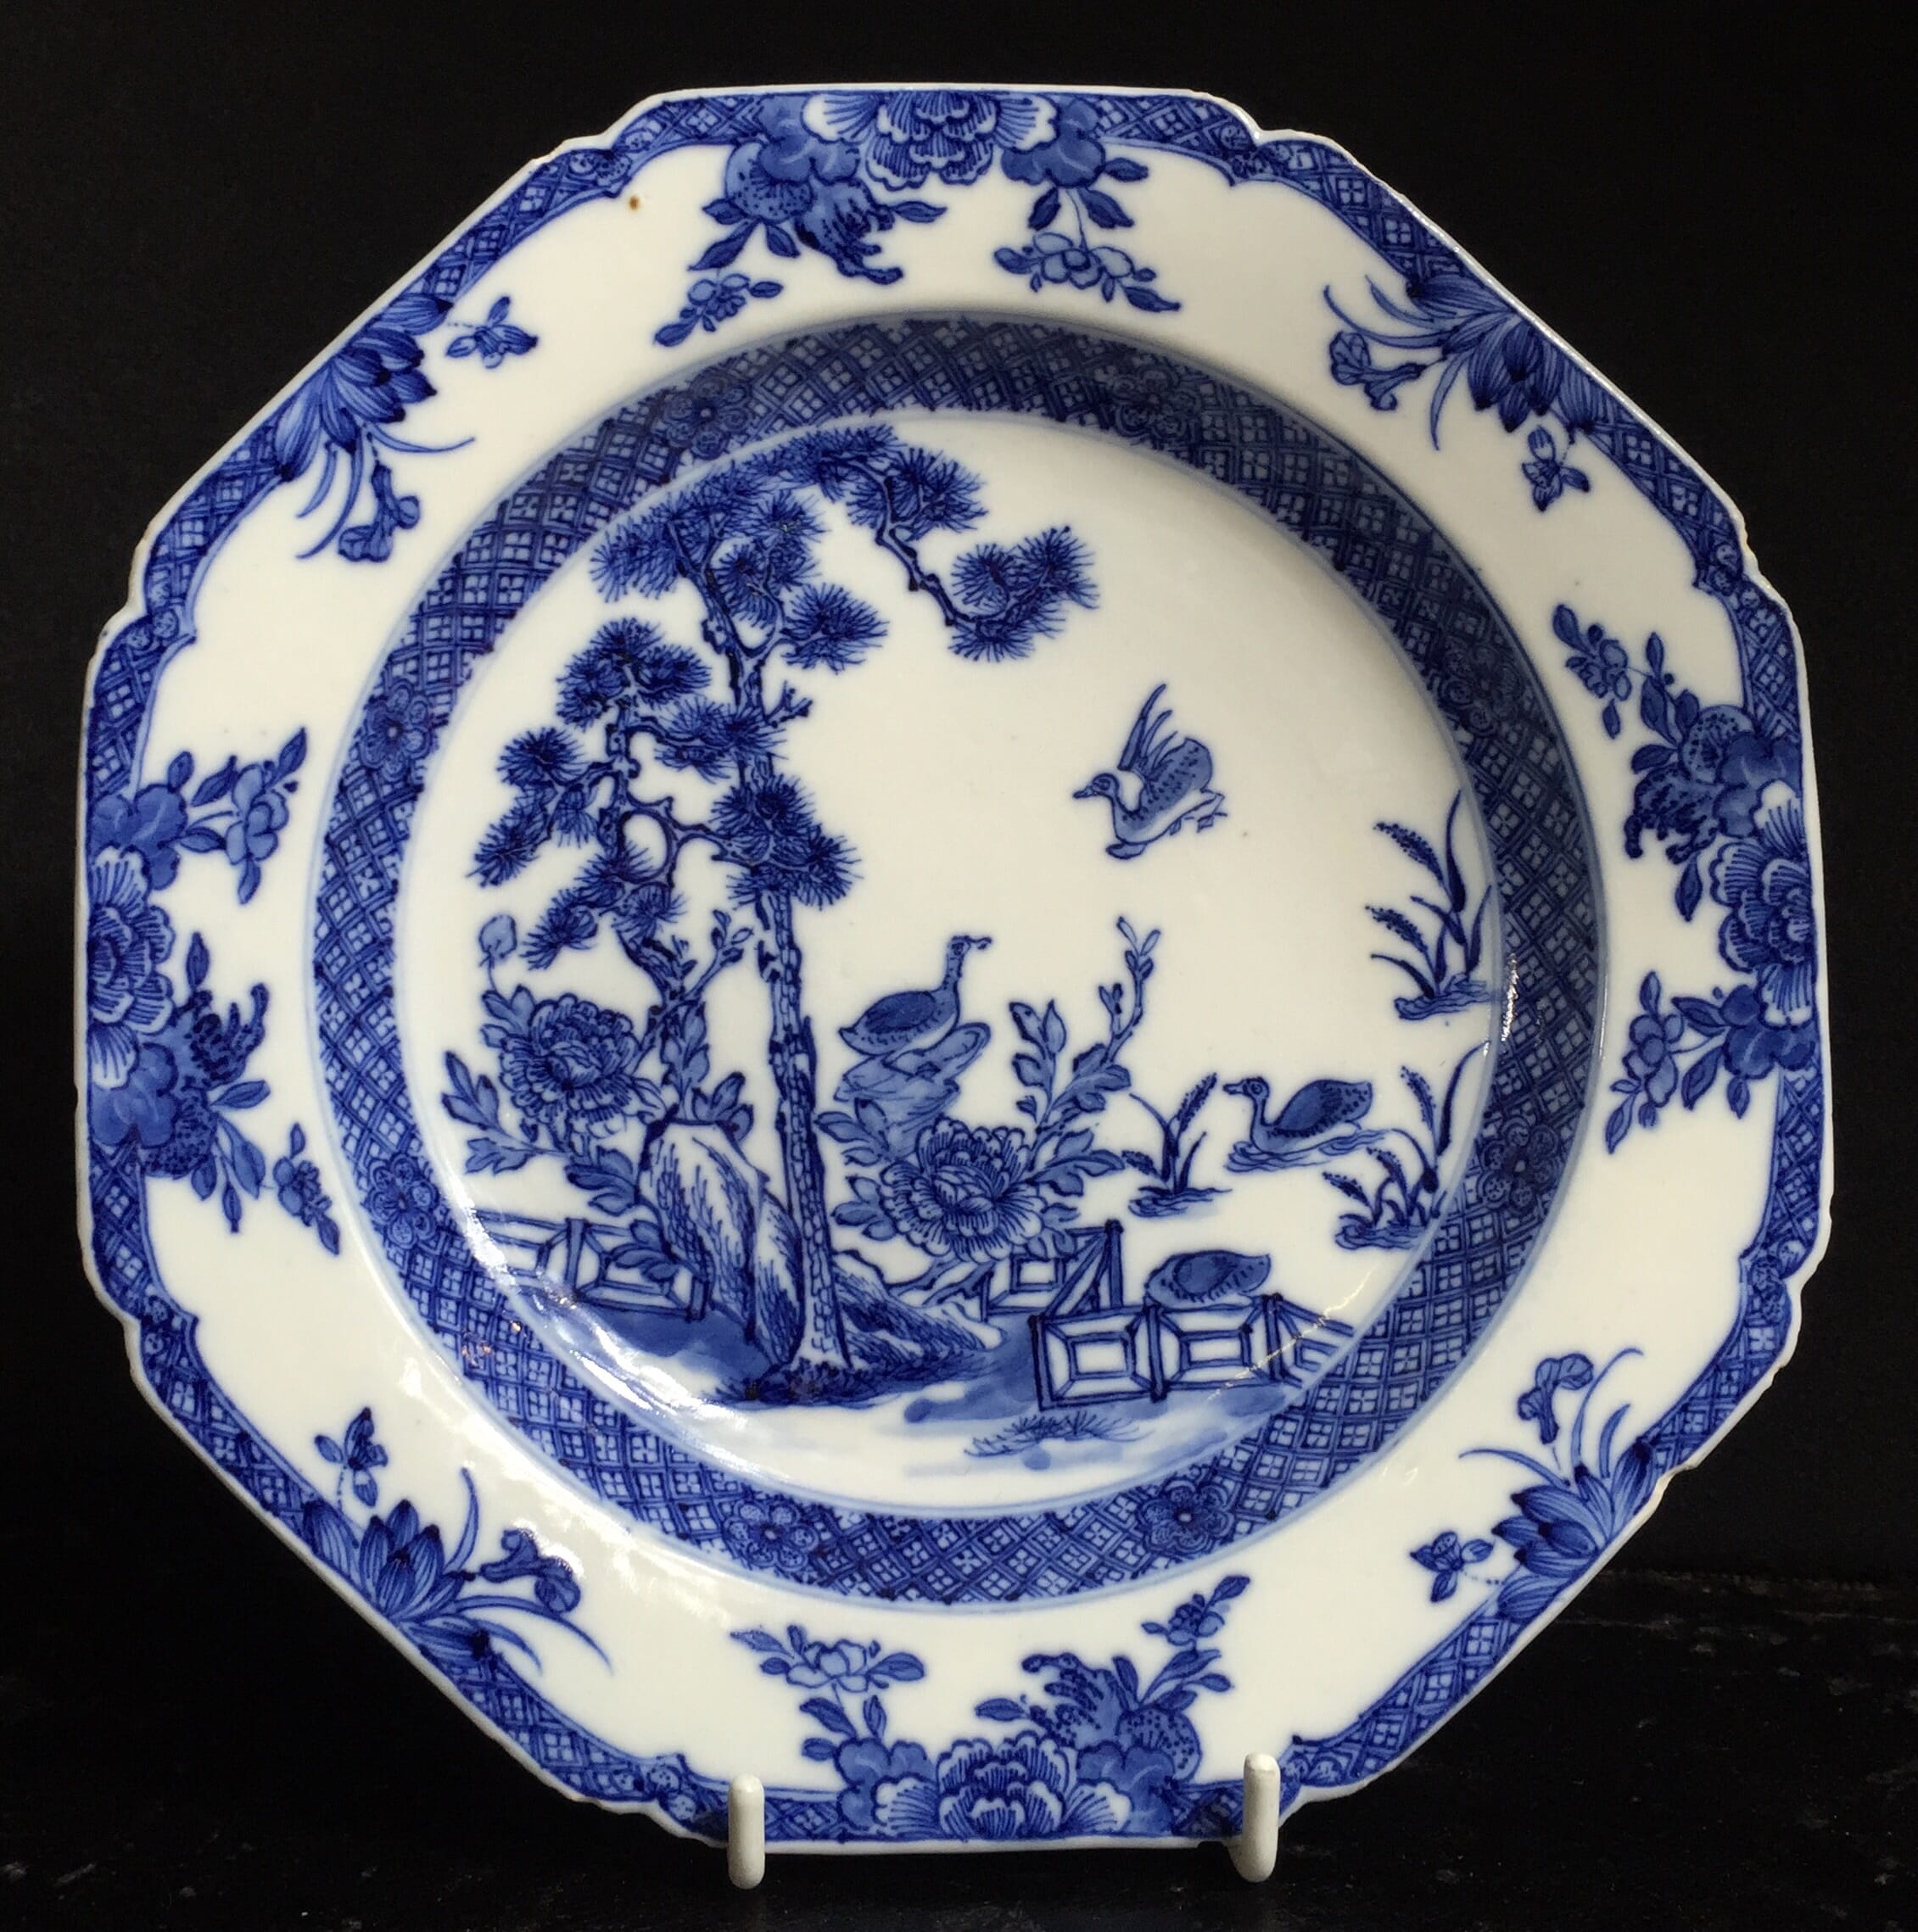 Chinese porcelain plate, blue & white pattern of birds & garden, c. 1750-0